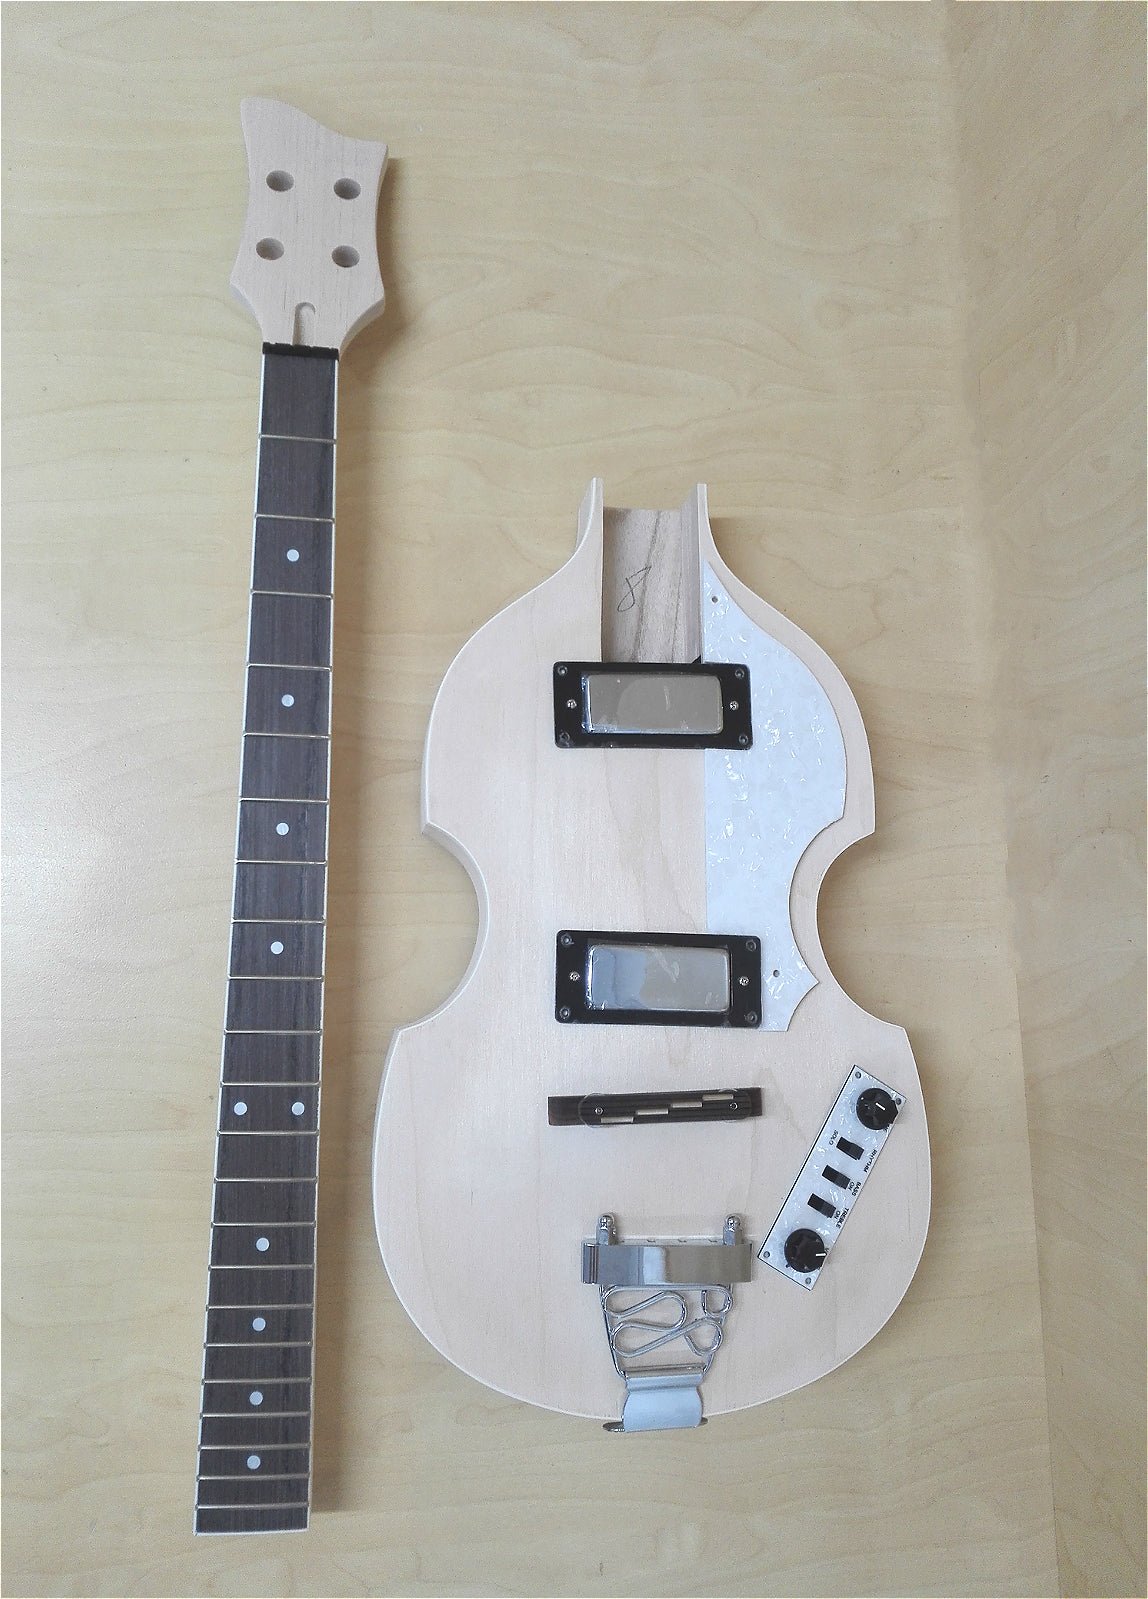 HSVL1910DIY Viola Style Electric Bass Guitar DIY Kit, No-Soldering, H-H Pickups